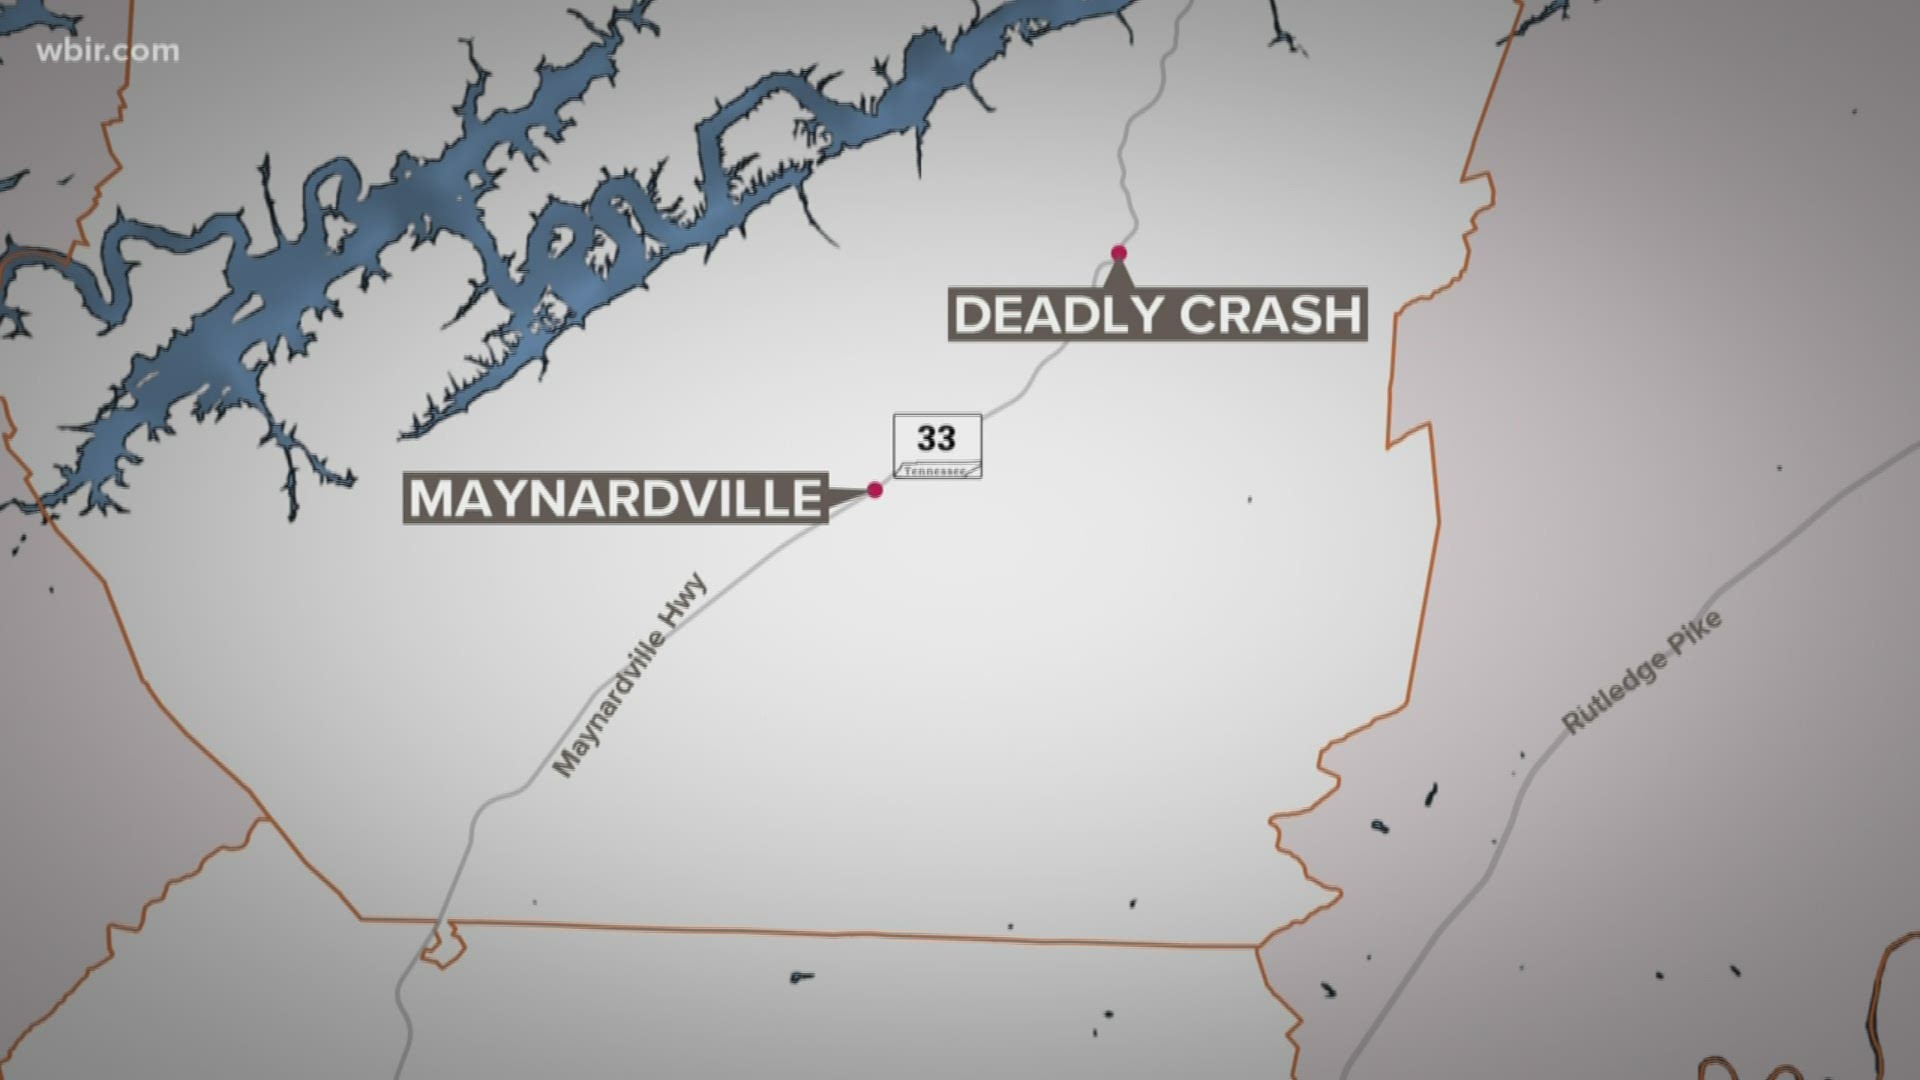 The crash happened on Maynardville Highway near Pine Crest Drive.